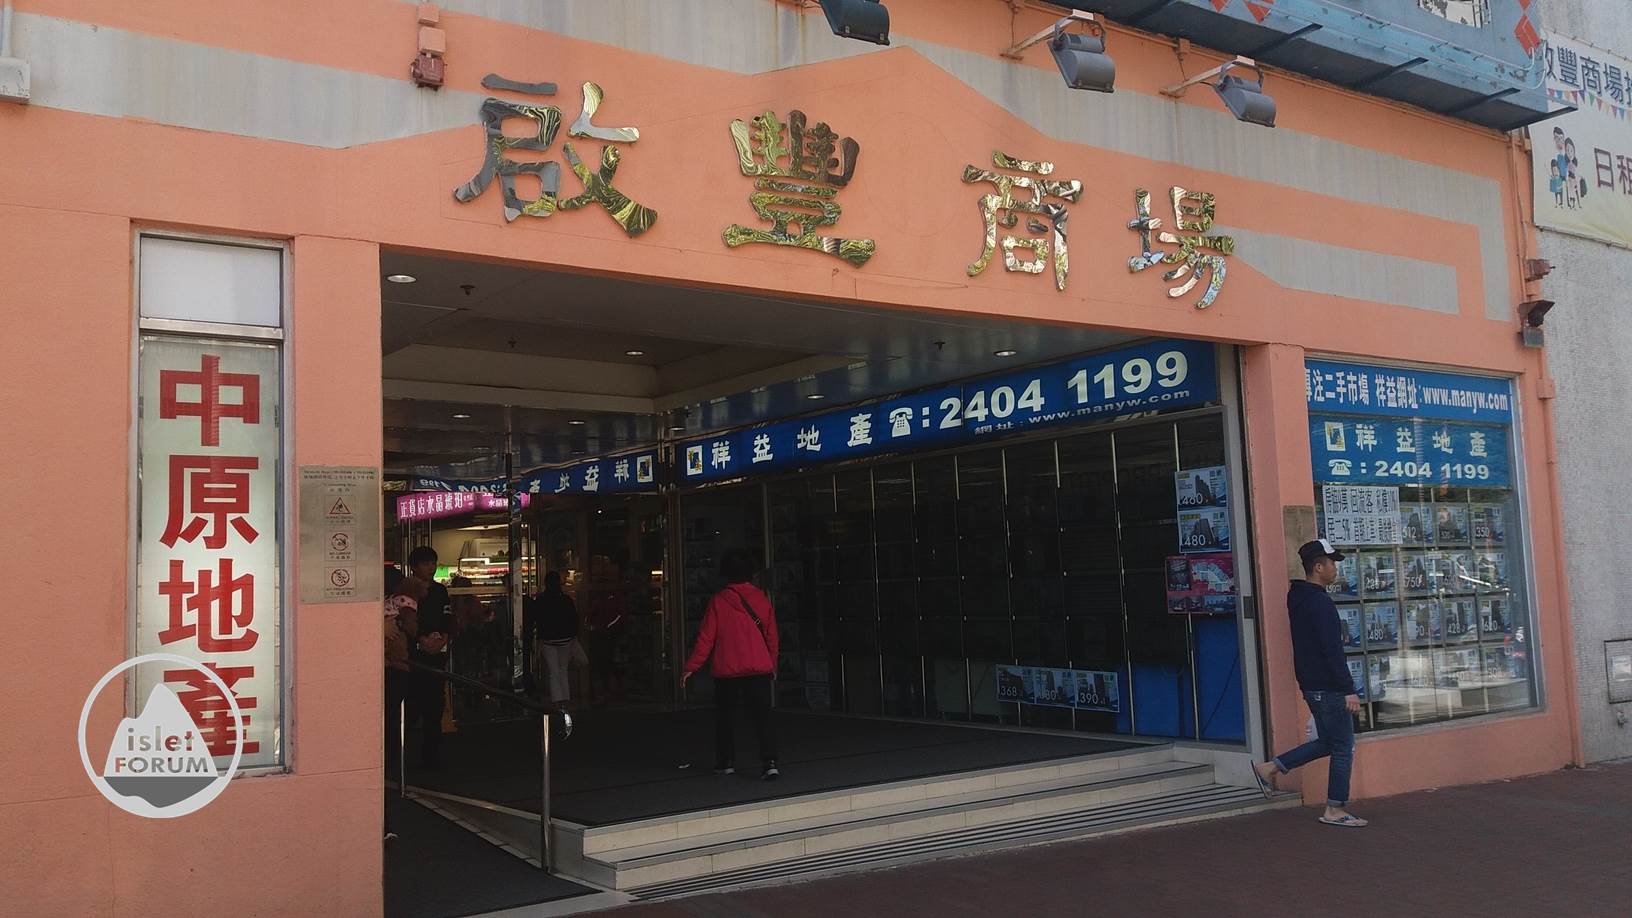 啟豐商場richland shopping arcade (6).jpg